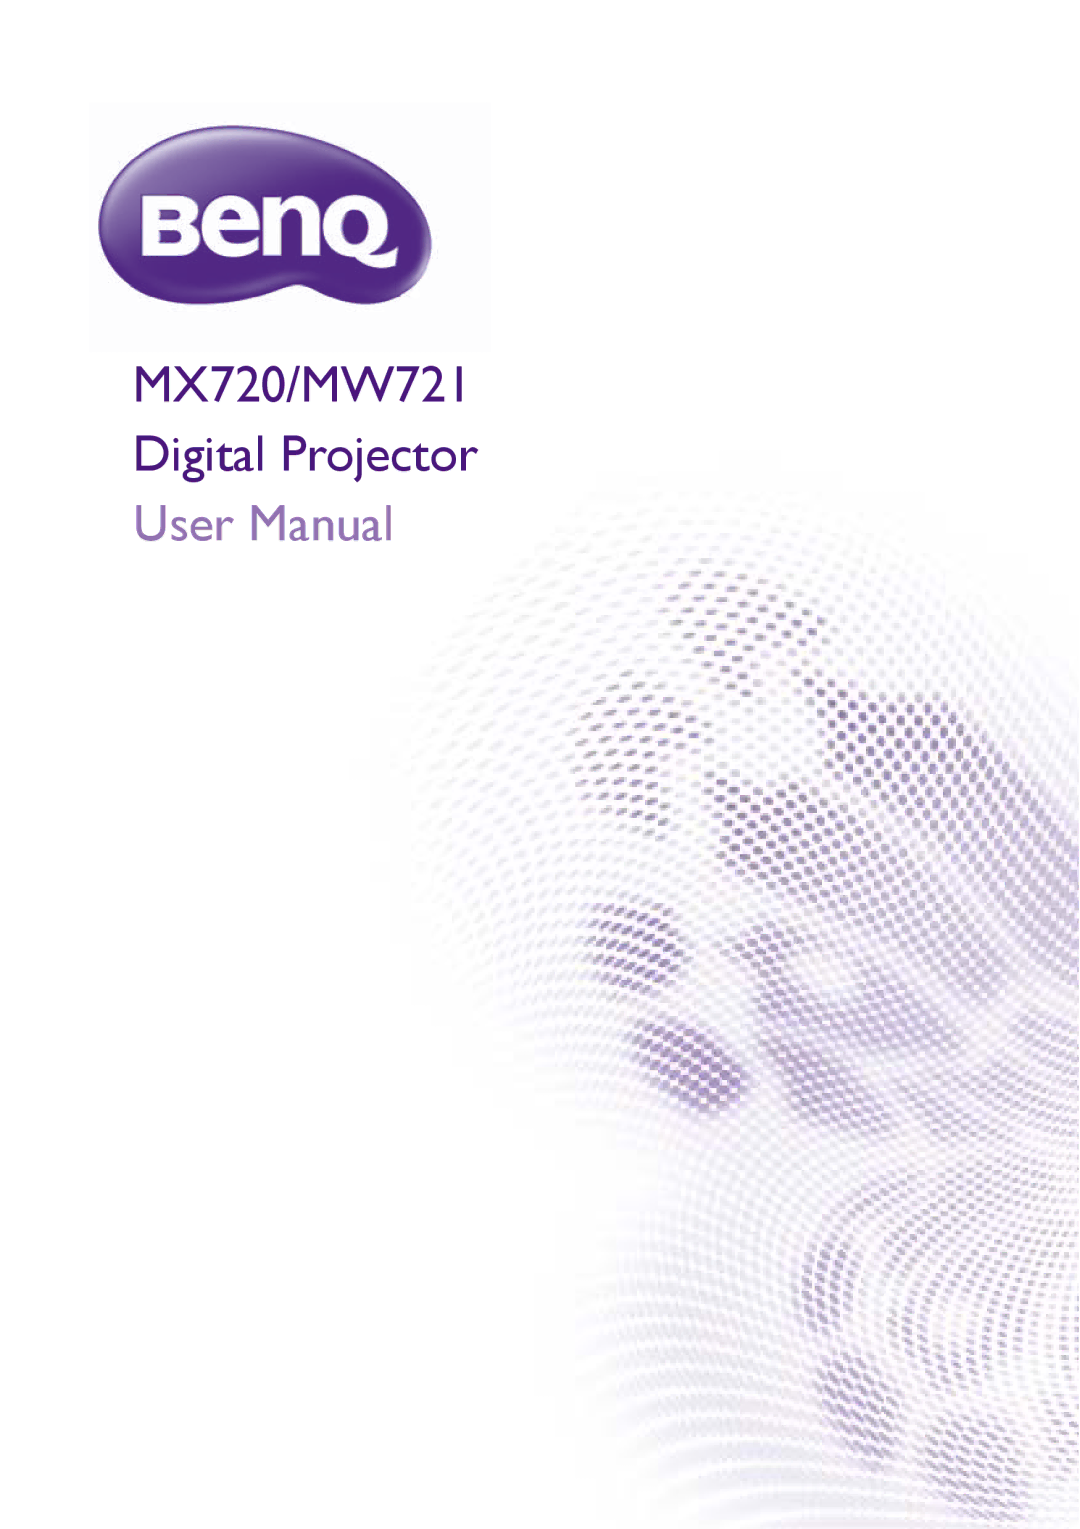 BenQ manual MX720/MW721 Digital Projector 